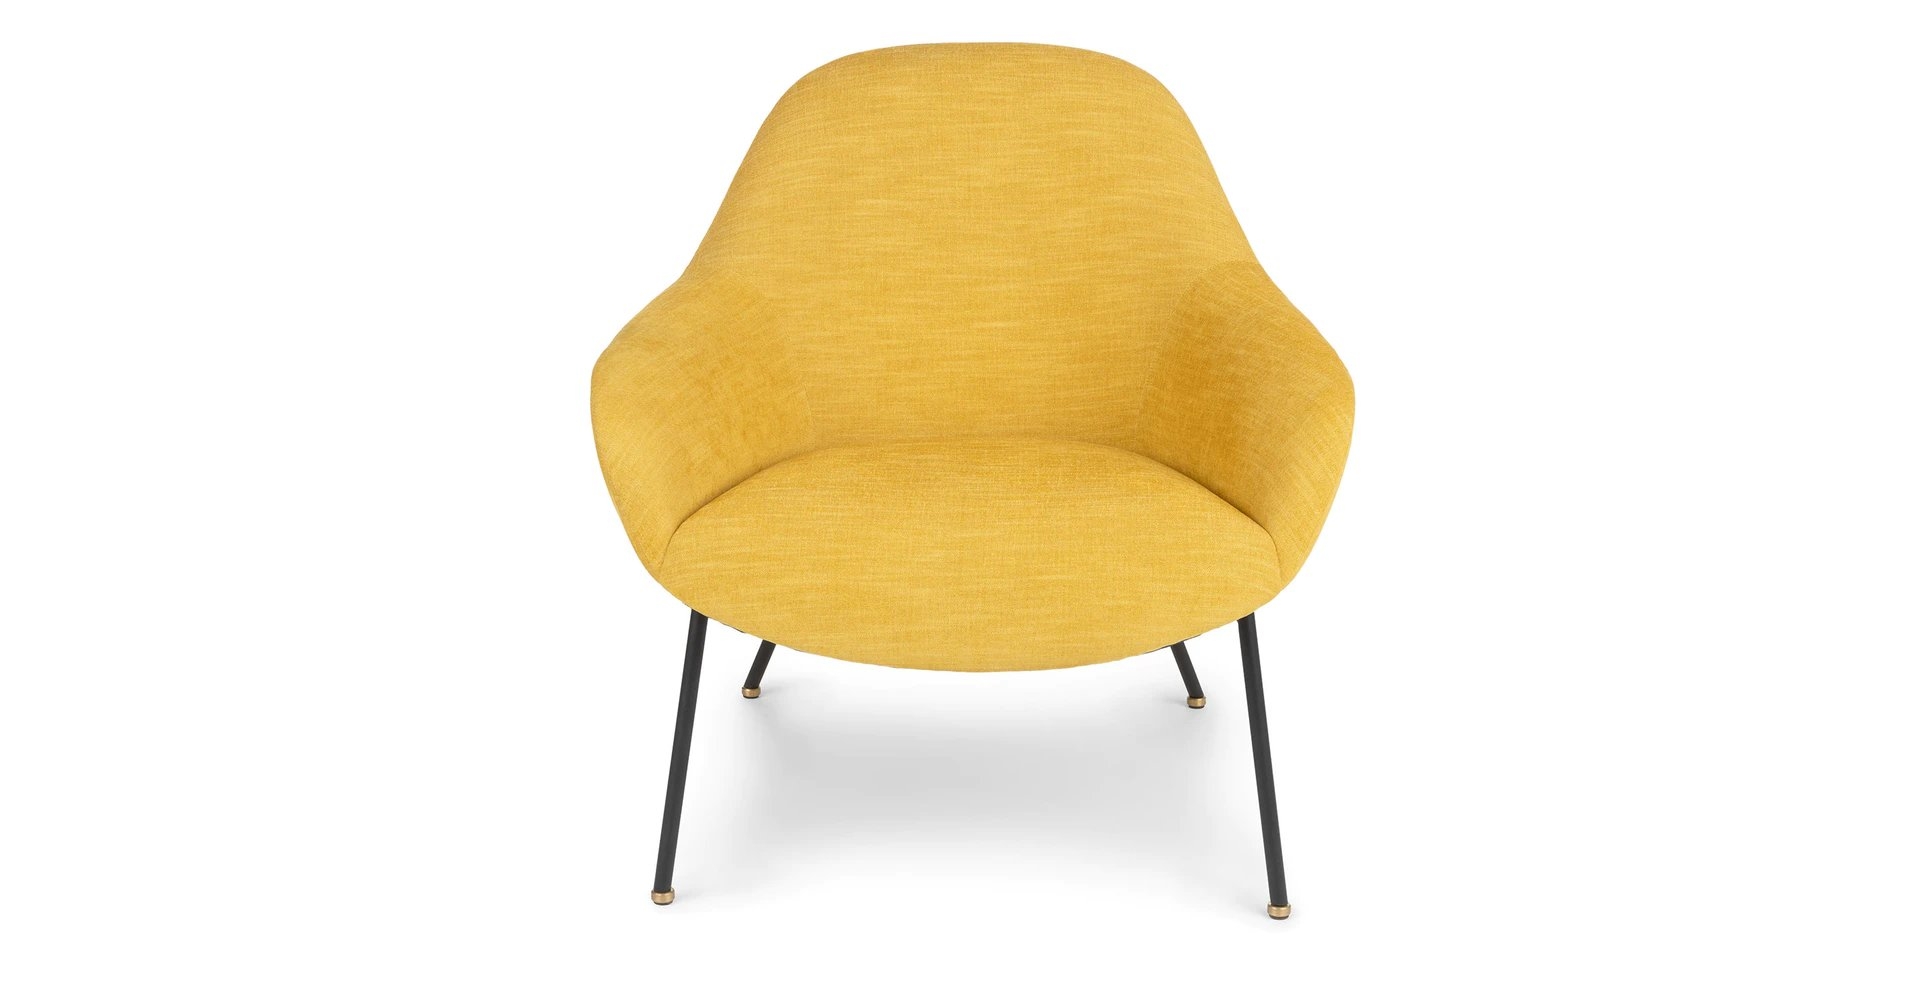 Savary Finch Yellow Chair - Image 0